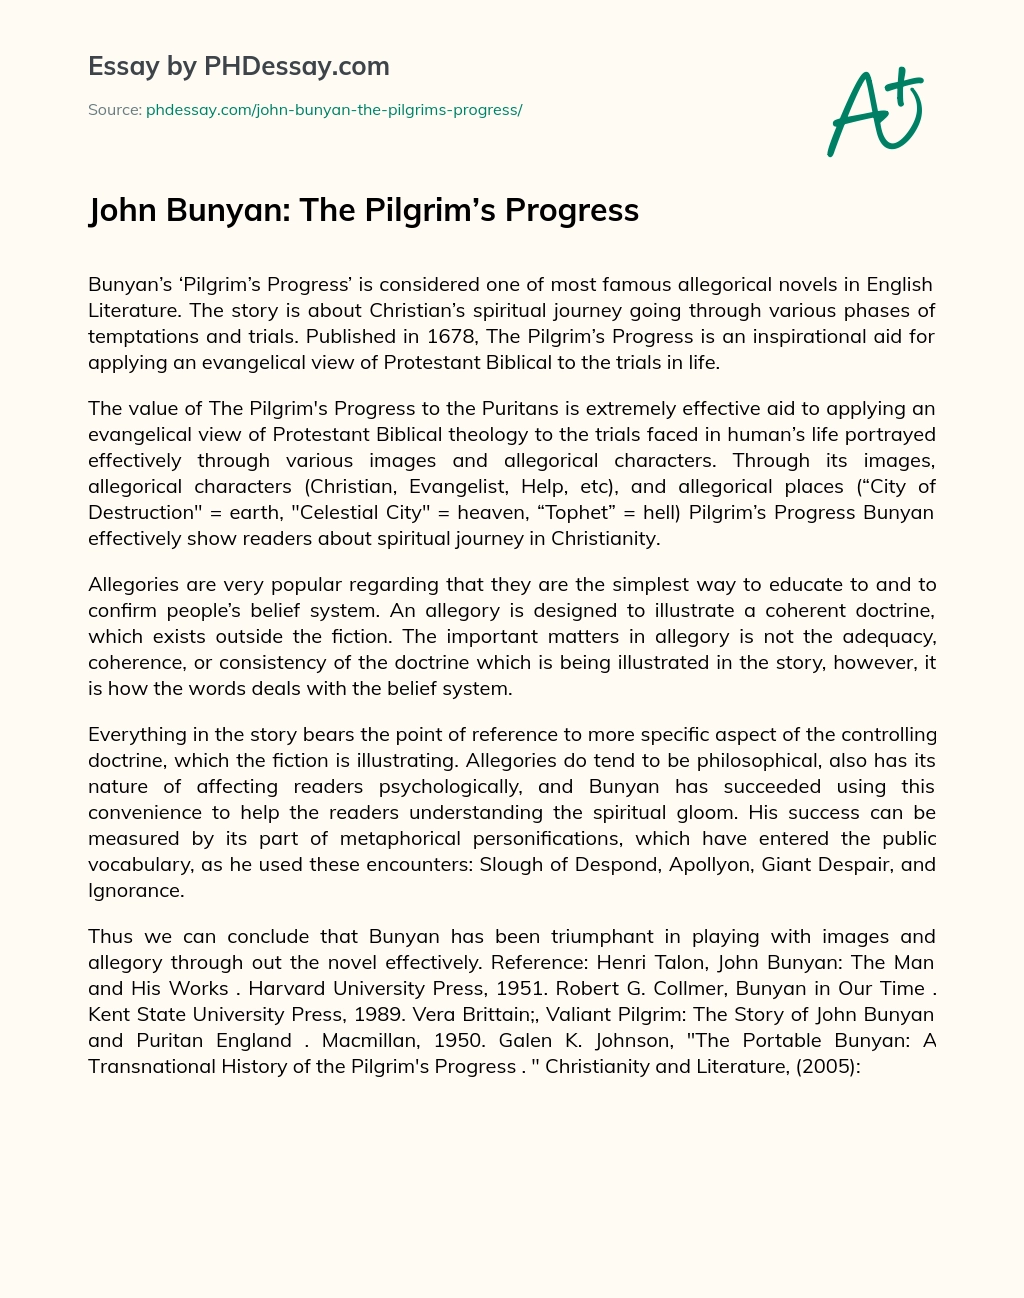 John Bunyan: The Pilgrim’s Progress essay